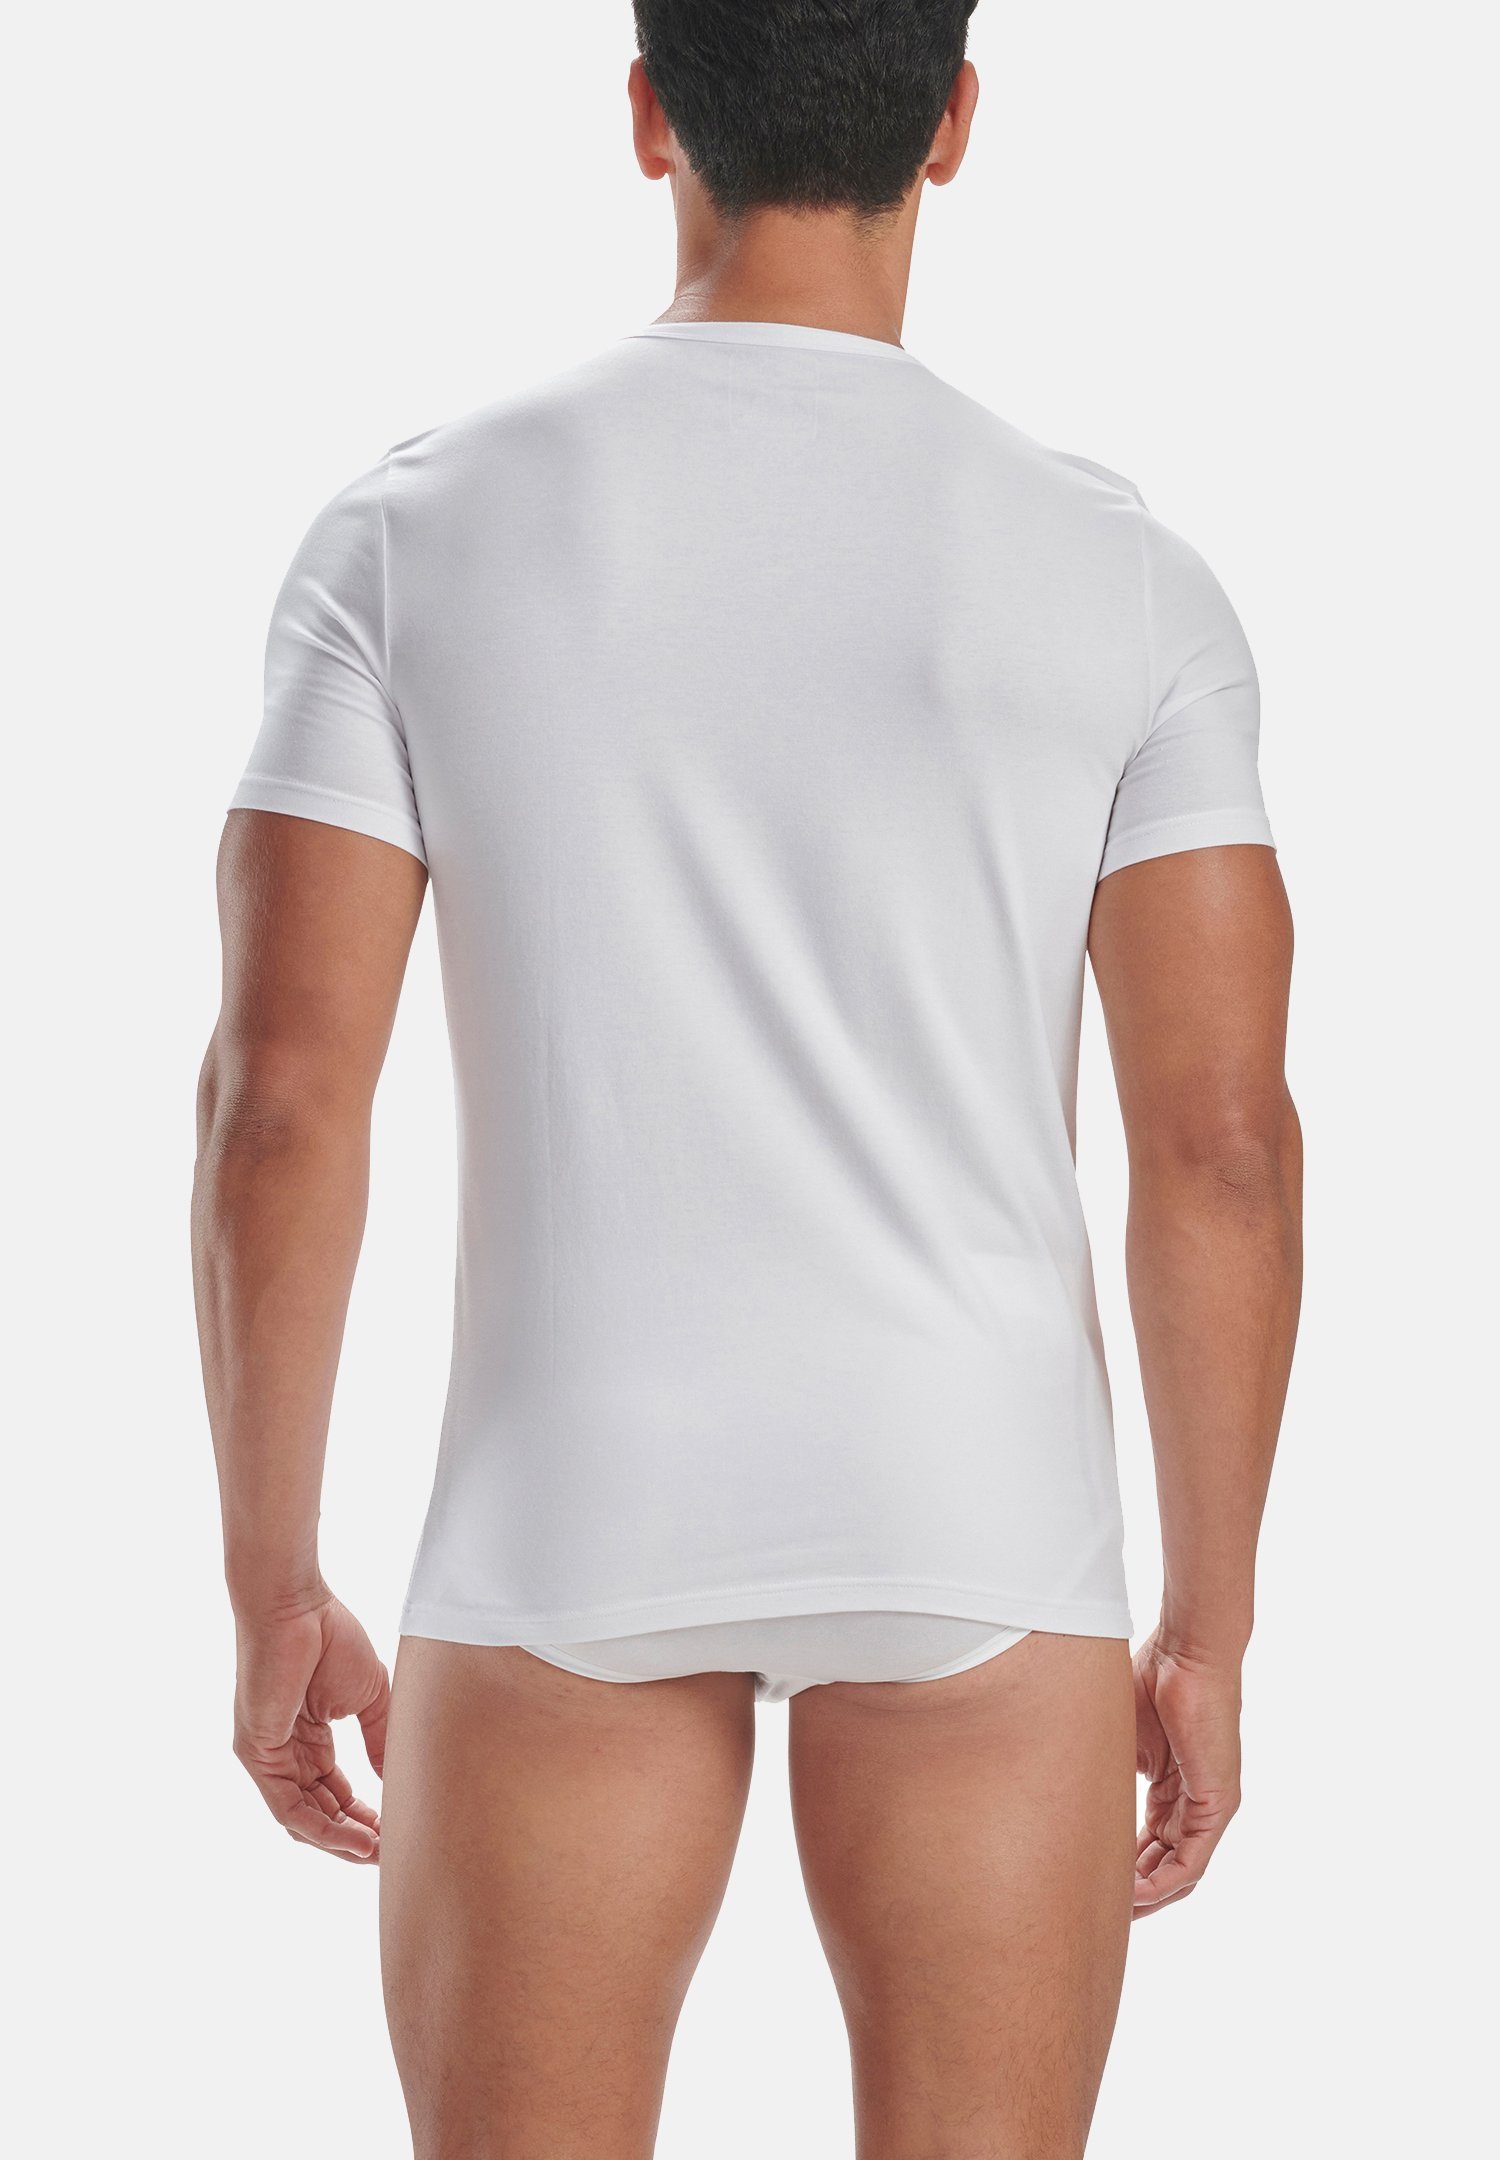 T-Shirt (8PK) White Performance Neck adidas Poloshirt Crew